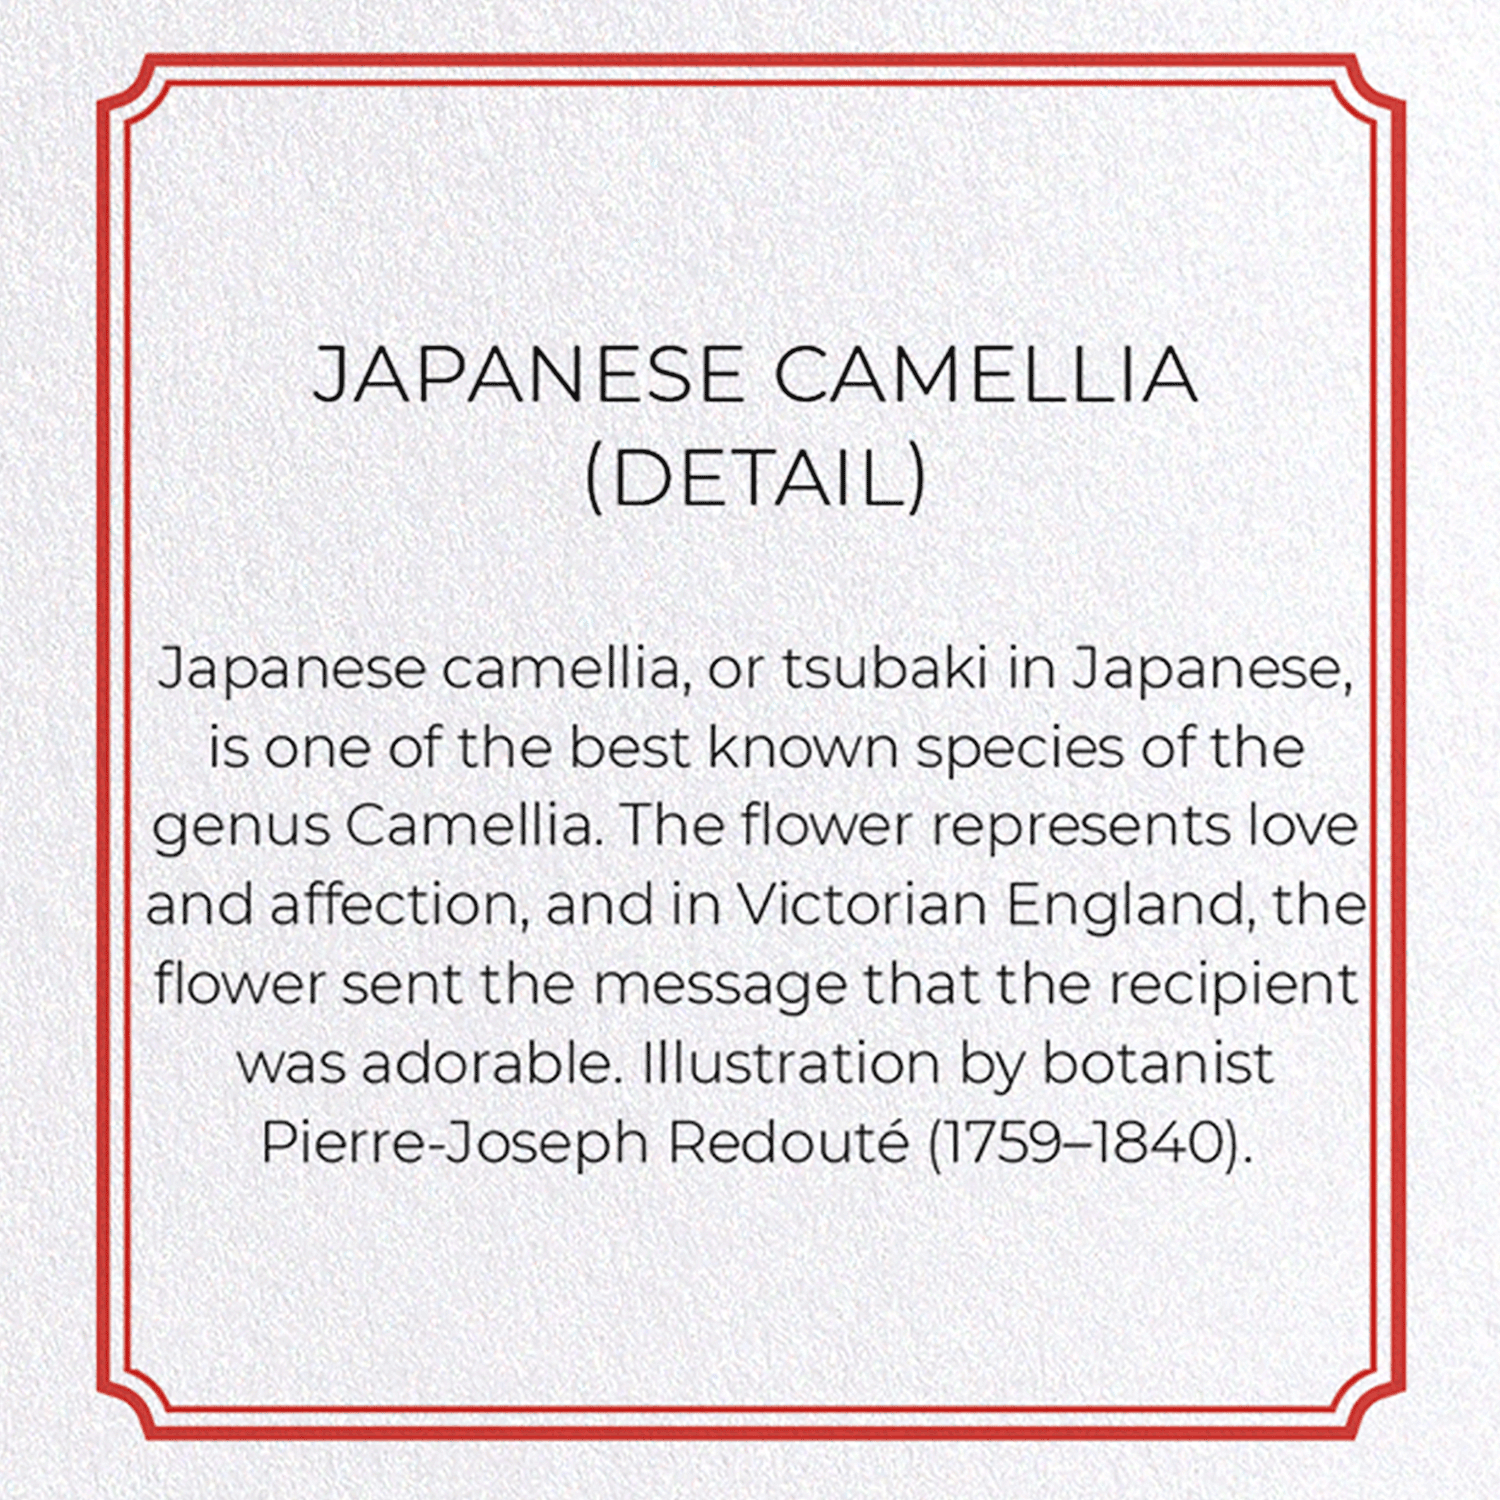 JAPANESE CAMELLIA